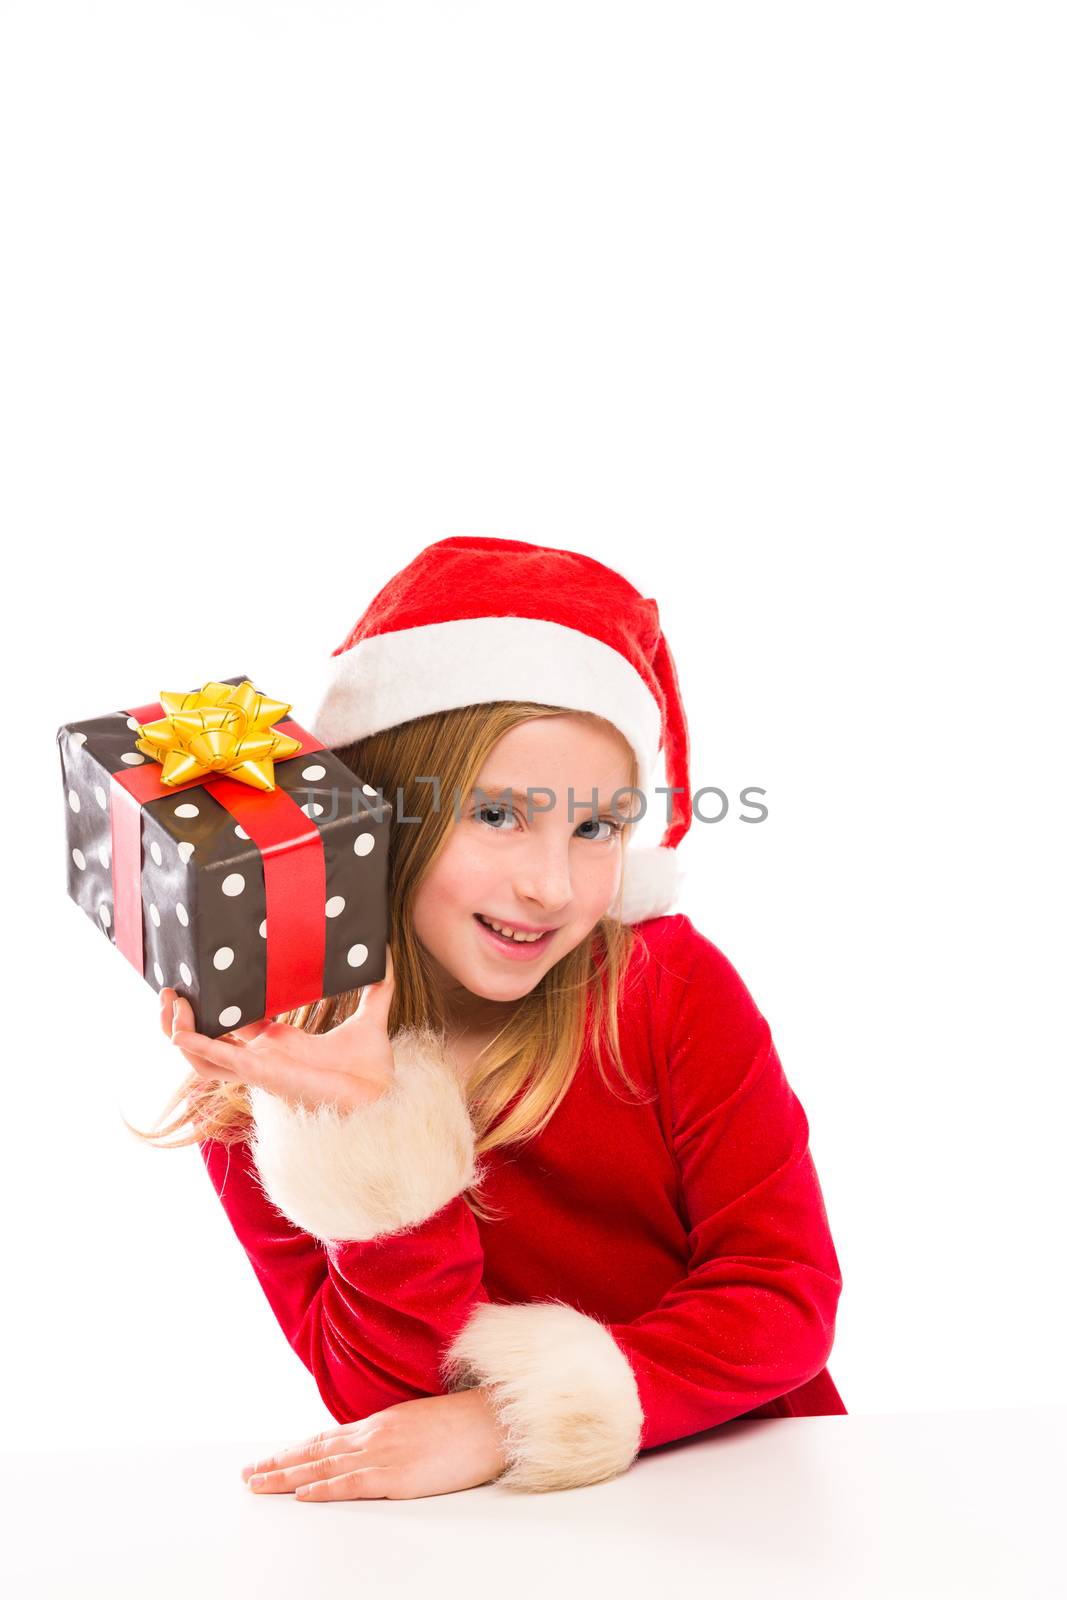 Christmas Santa kid girl happy excited with ribbon gift by lunamarina